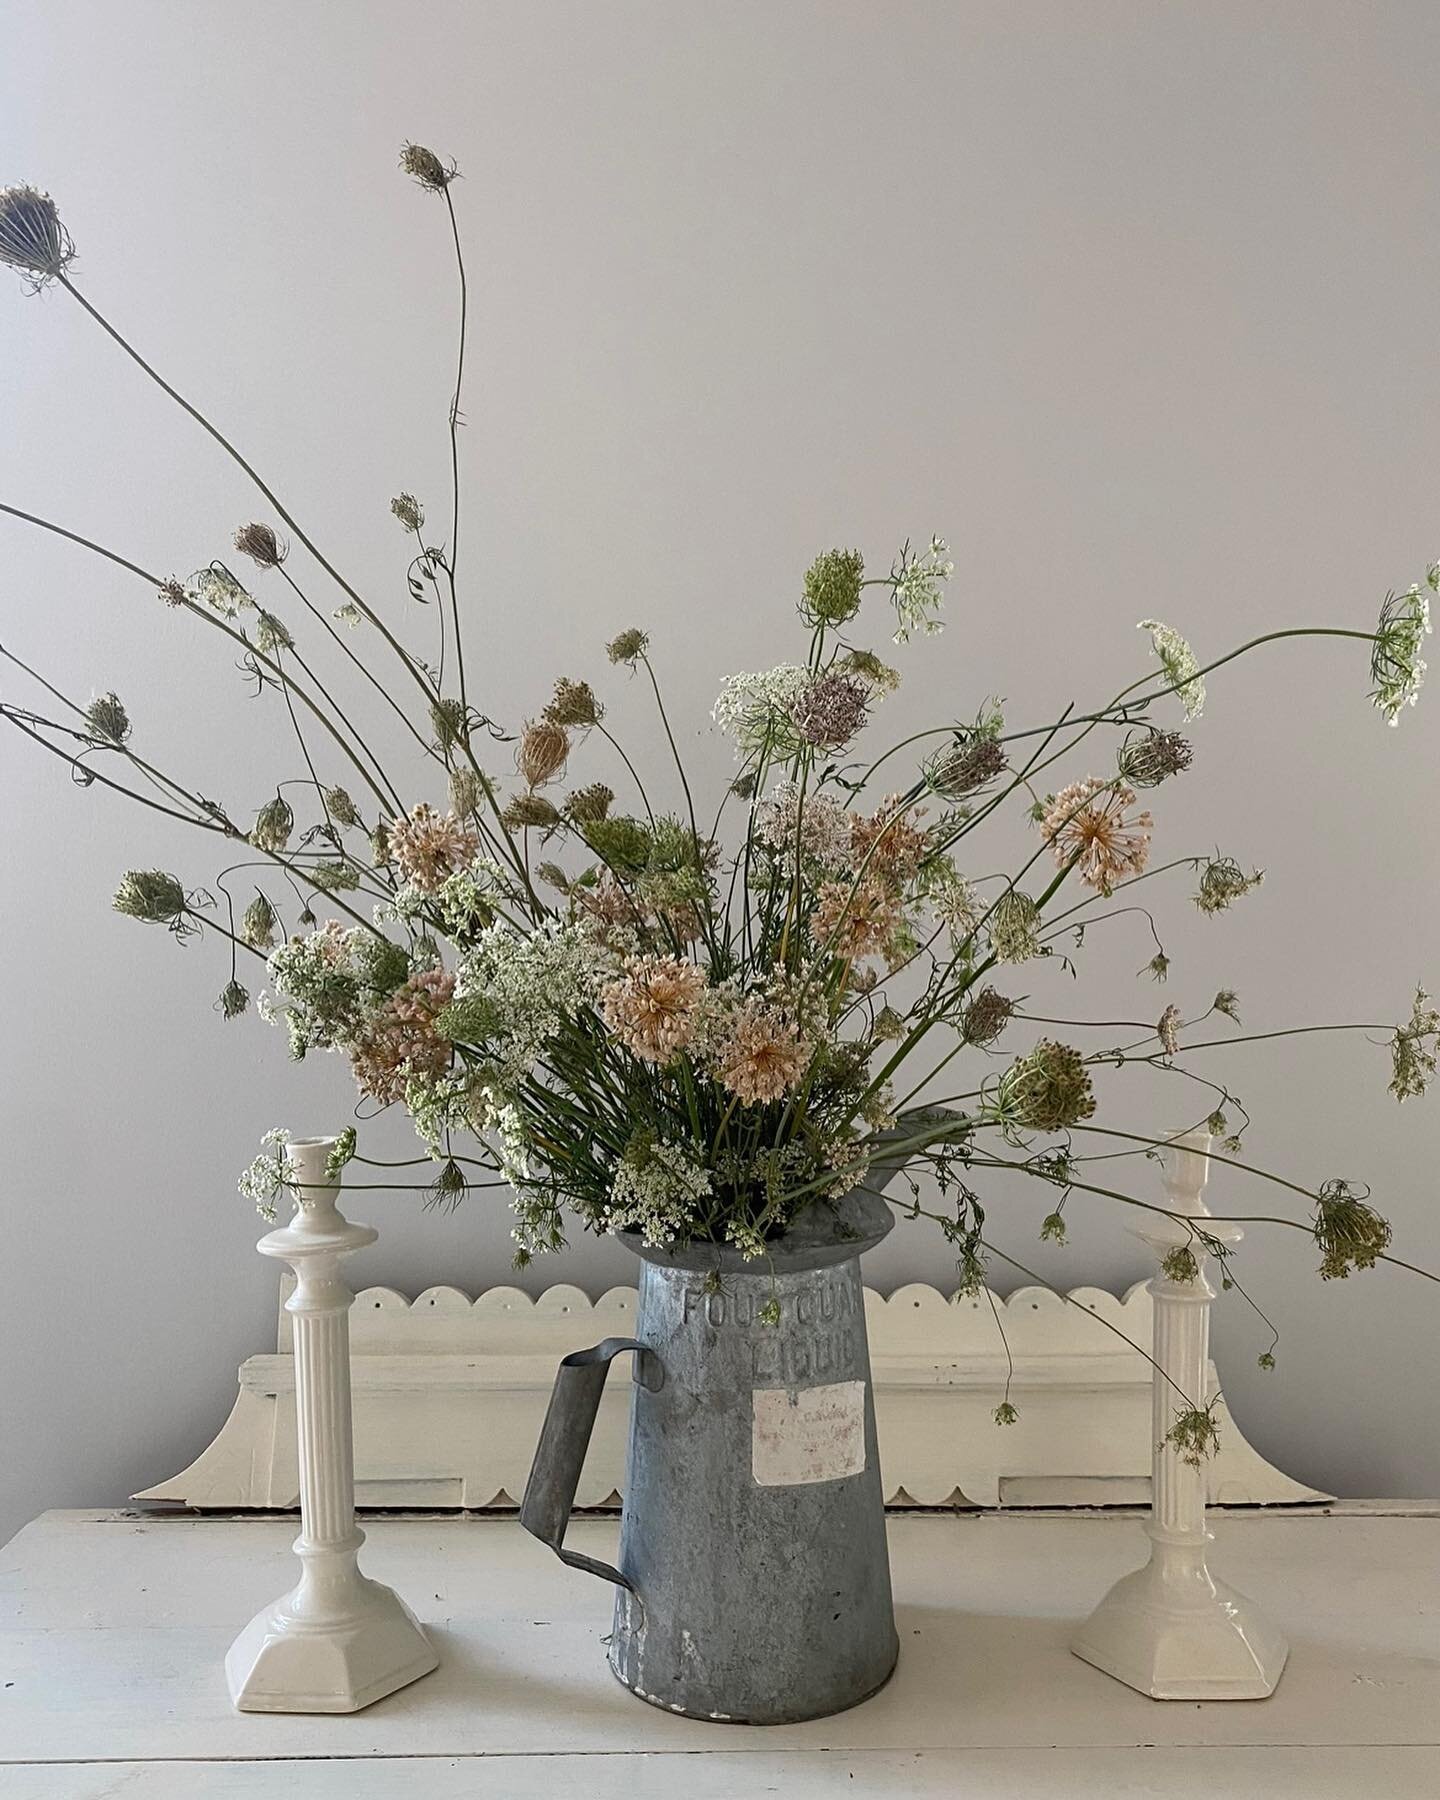 An arrangement for the house before a busy Fall wedding season begins next week. Can&rsquo;t wait!

#northfork #northforkfloraldesigner #greenport #queenannslace #driedflowers